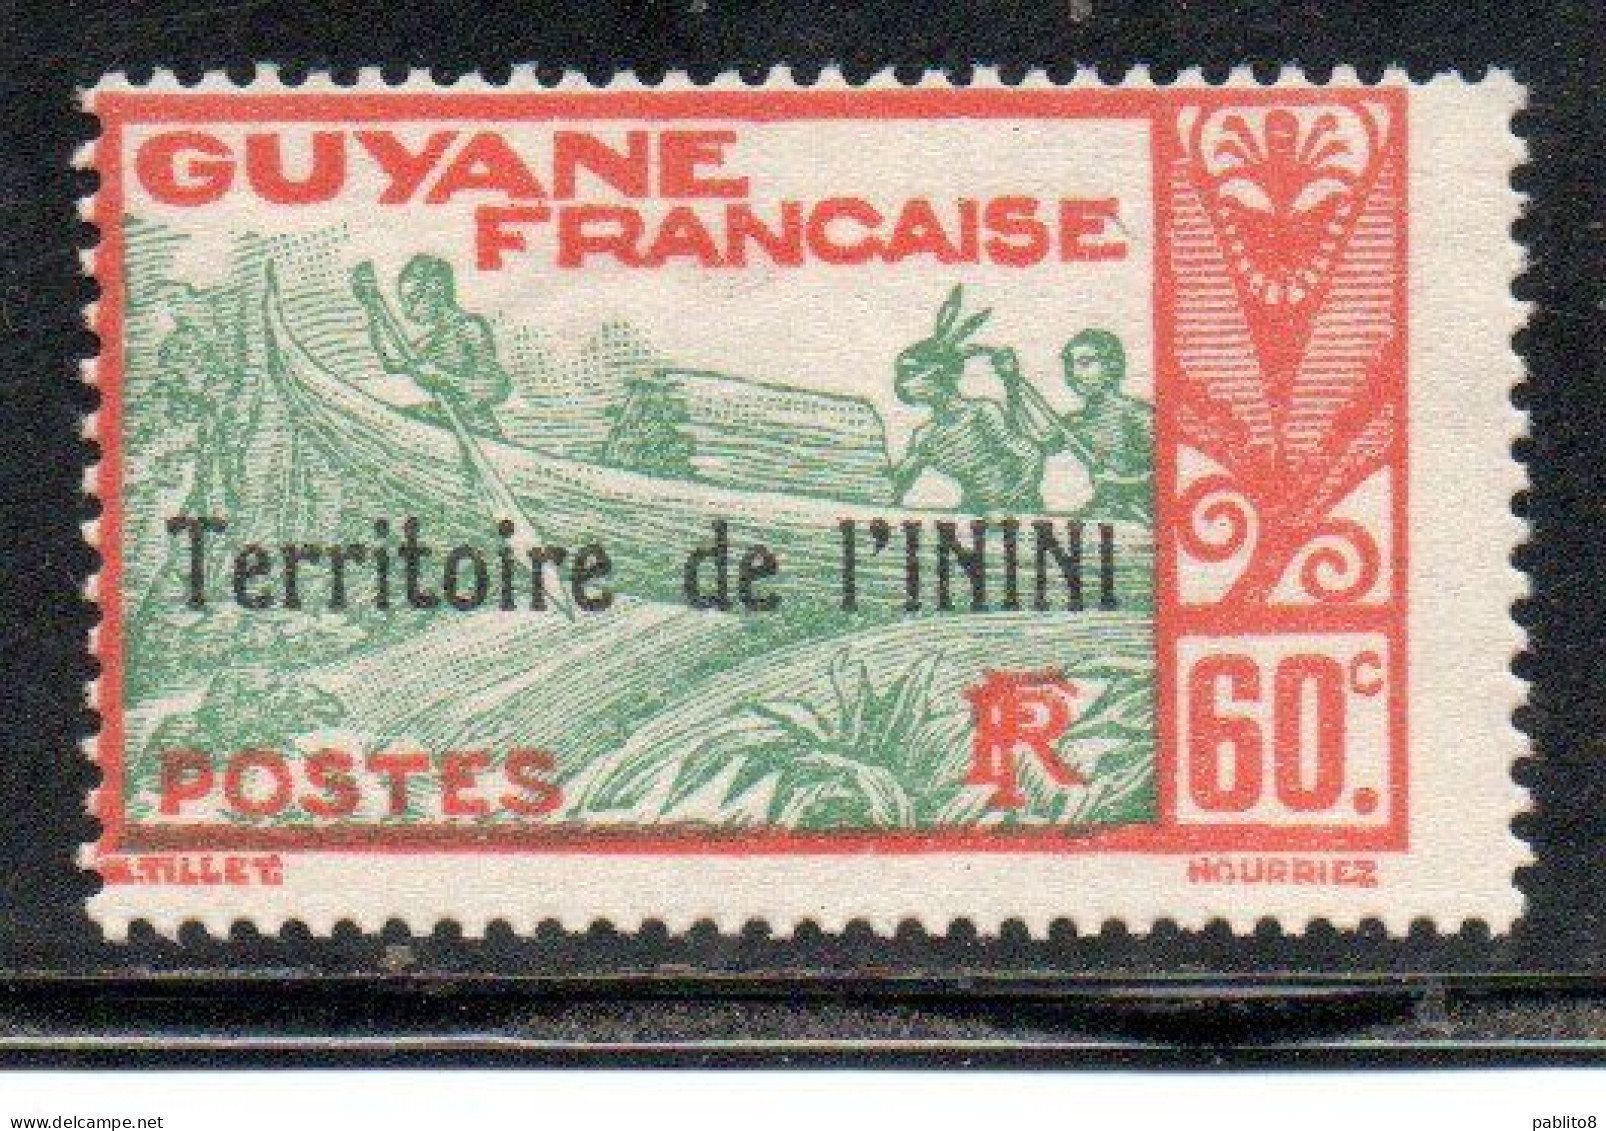 GUYANE FRANCAISE TERRITOIRE DE L'ININI OVERPRINTED SURCHARGE 1932 1940 SHOOTING RAPIDS MARONI RIVER 60c MNH - Nuovi